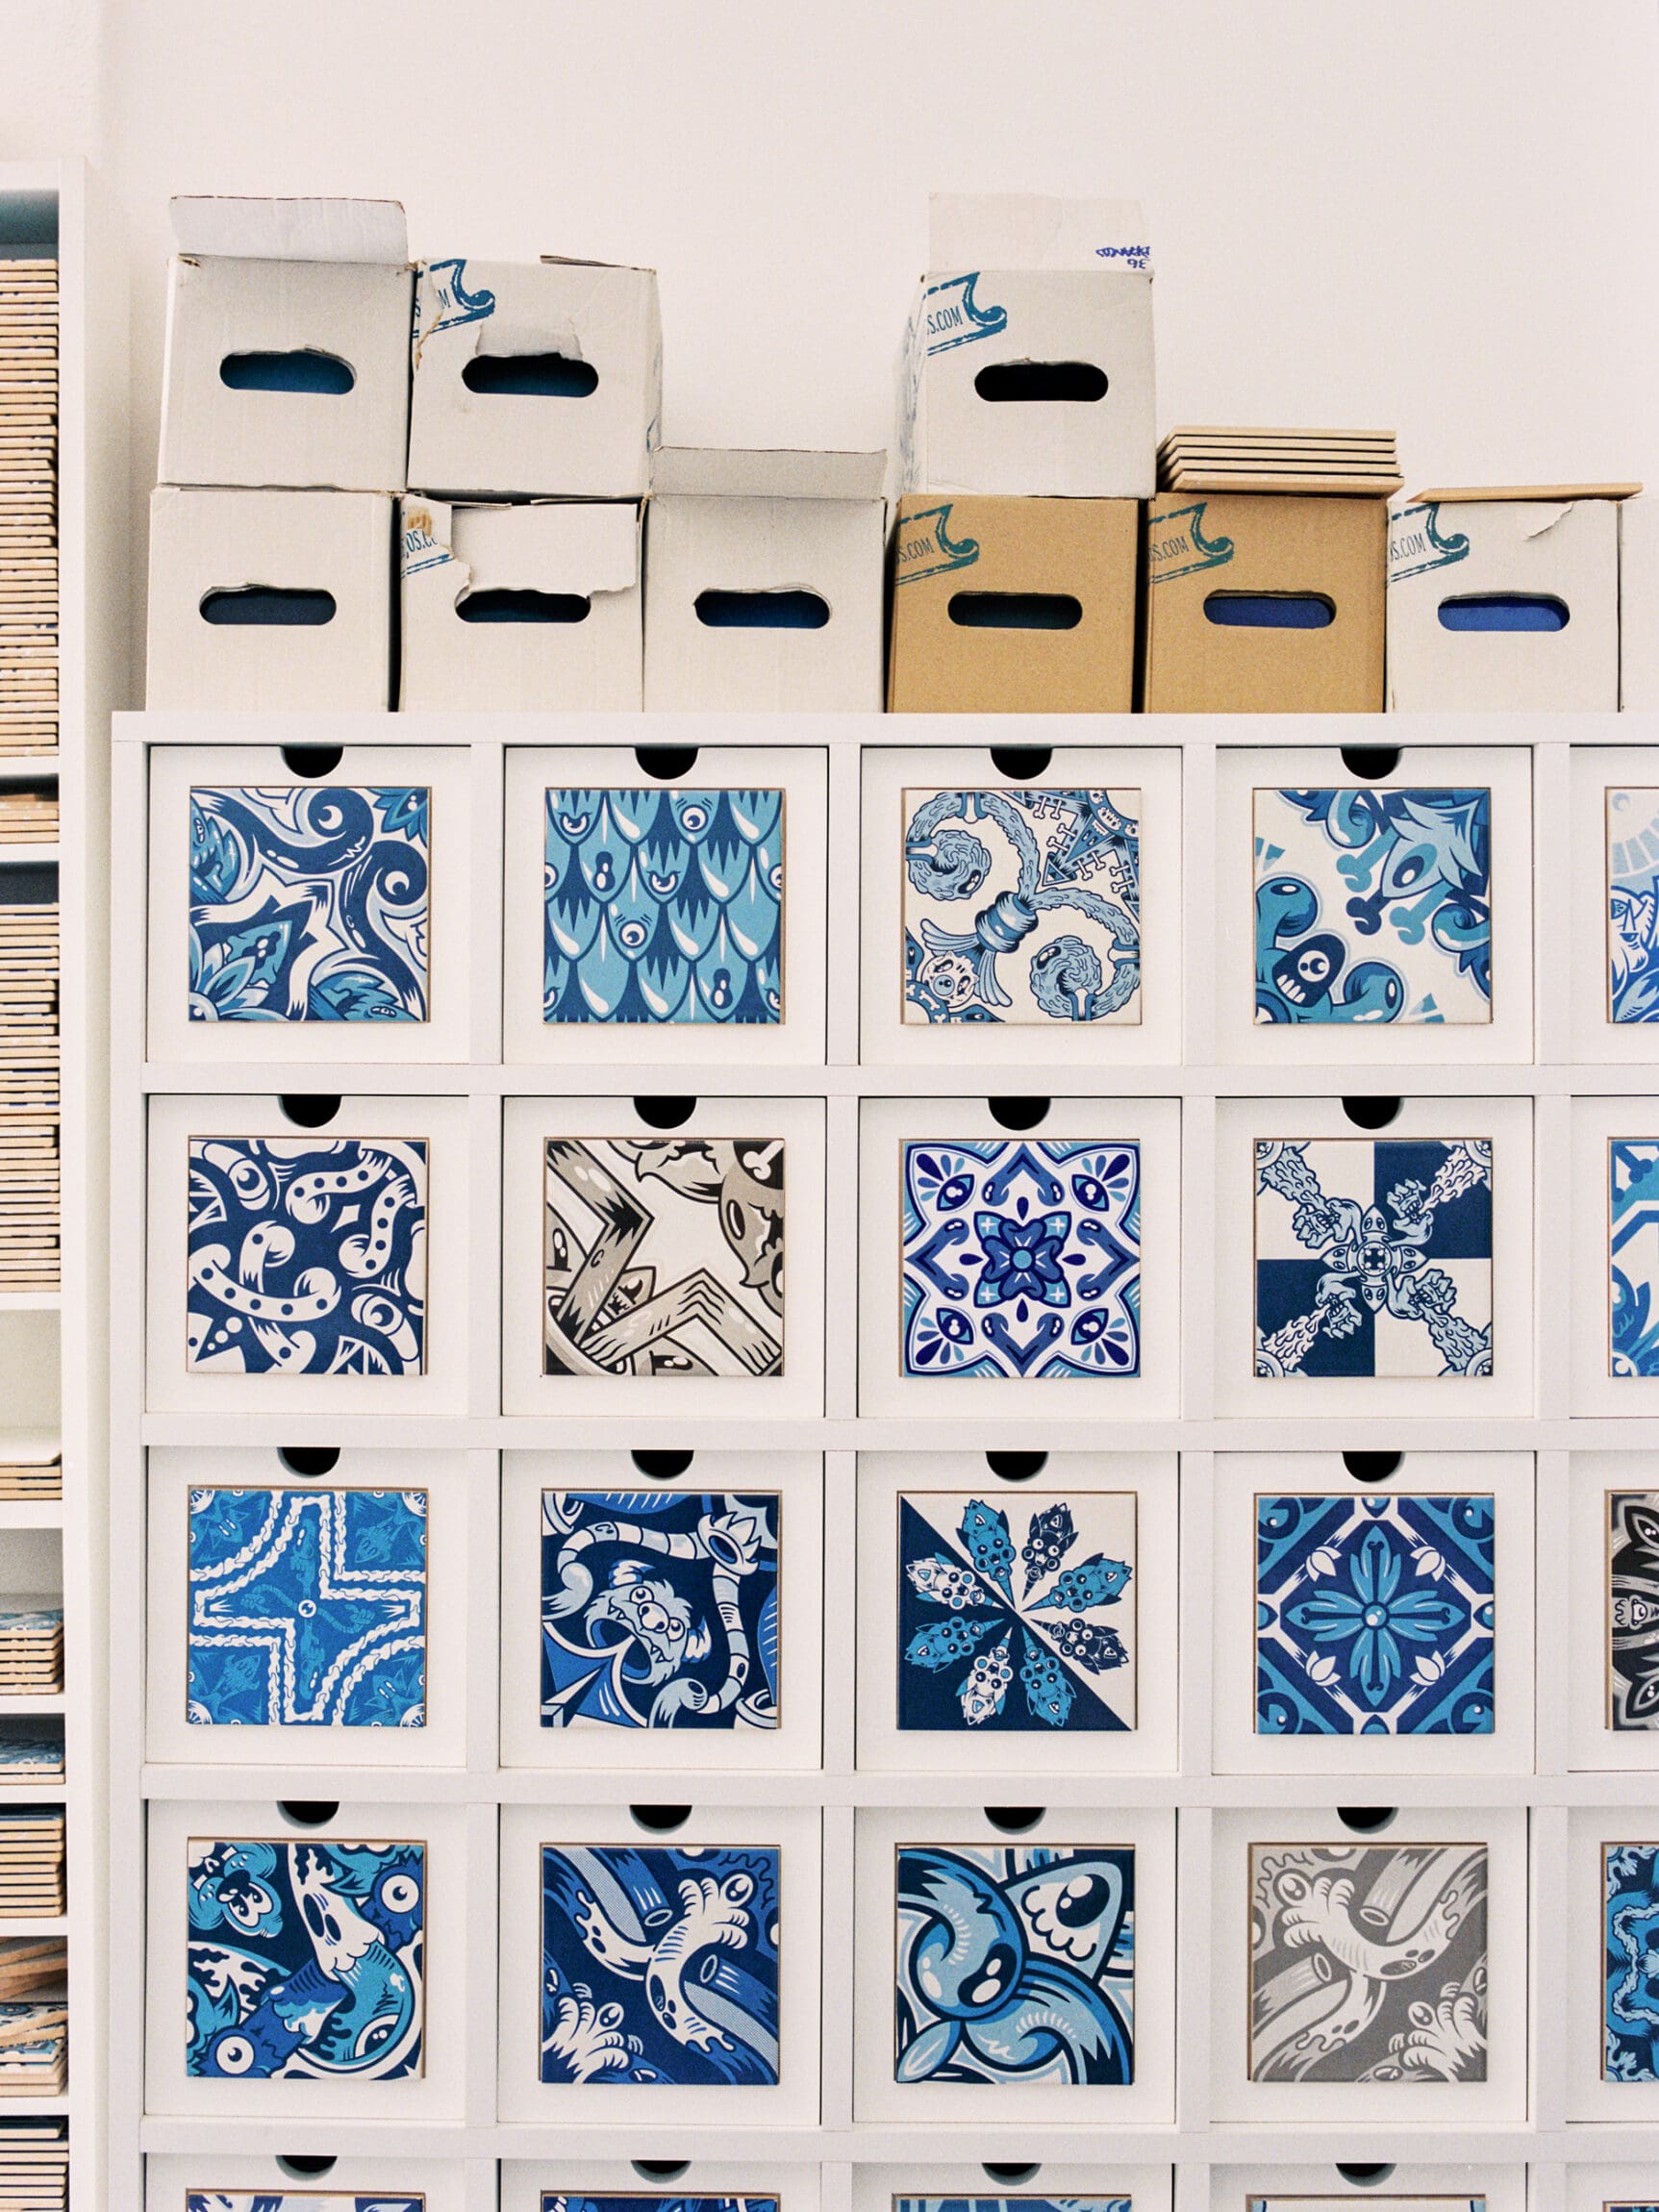 Diogo Machado, aka Add Fuel, on reinterpreting Portuguese azulejo tiles | Diogo Machado's tile designs